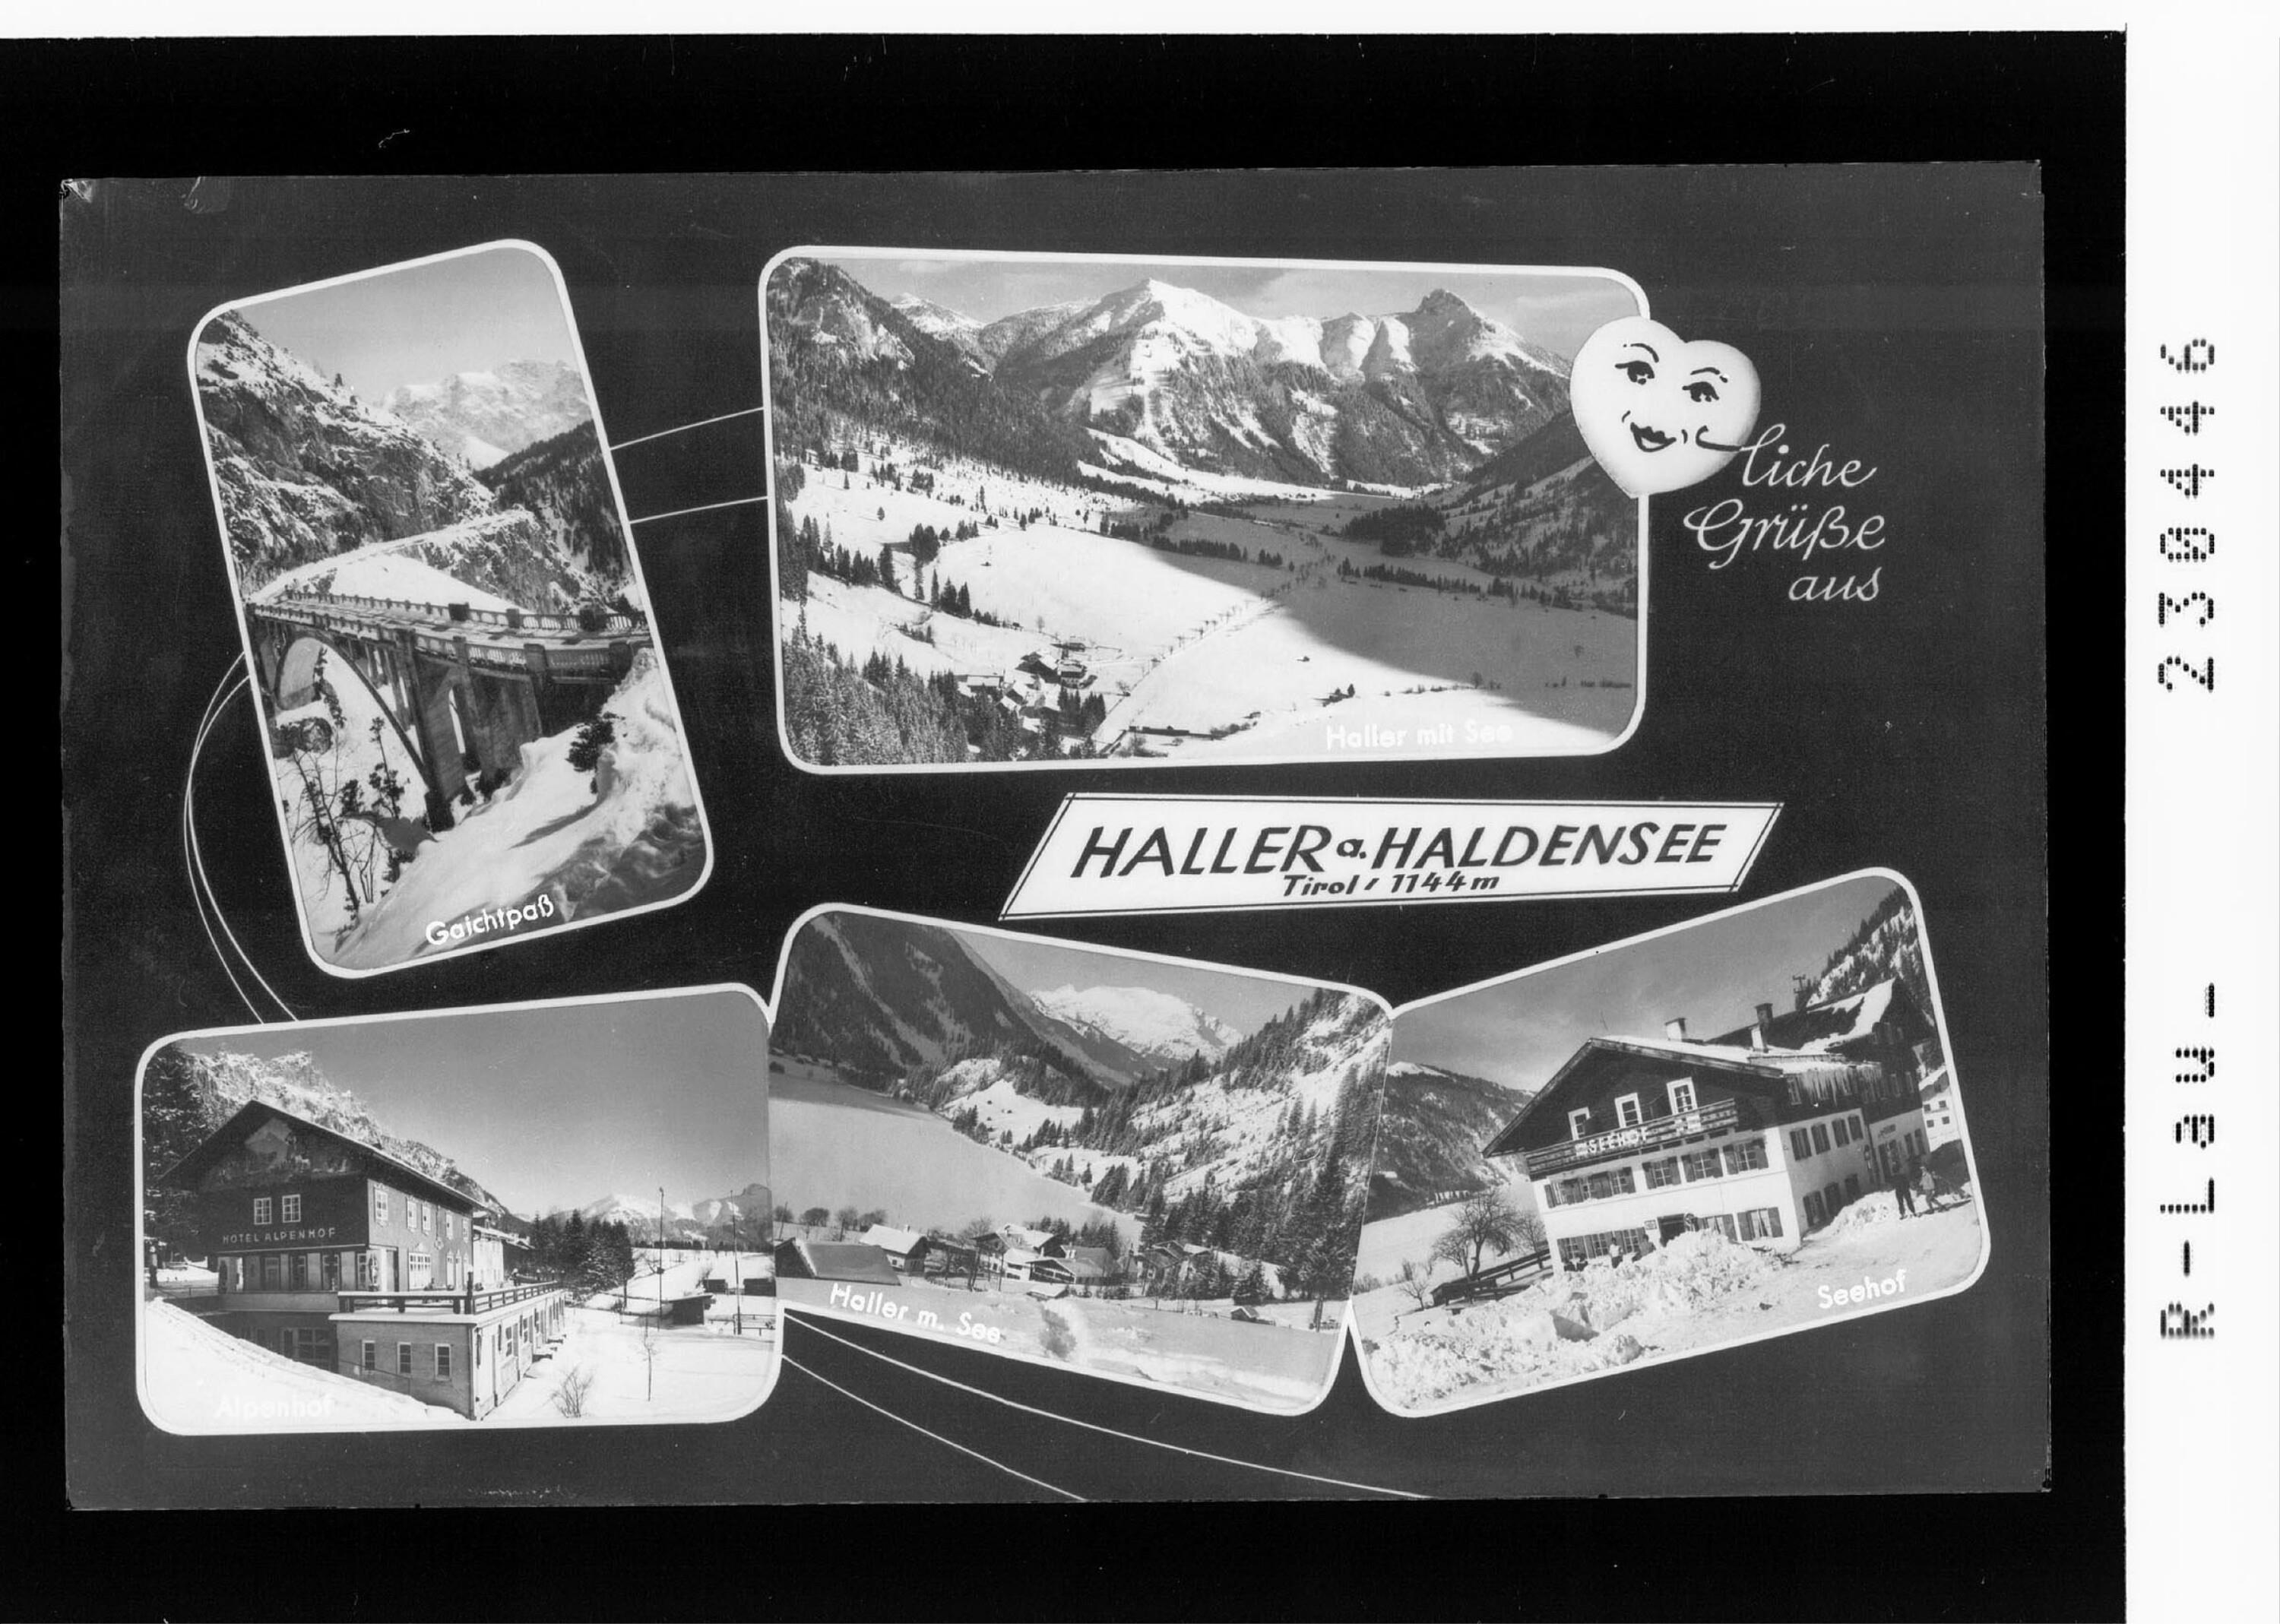 Haller am Haldensee 1144 m / Tirol></div>


    <hr>
    <div class=